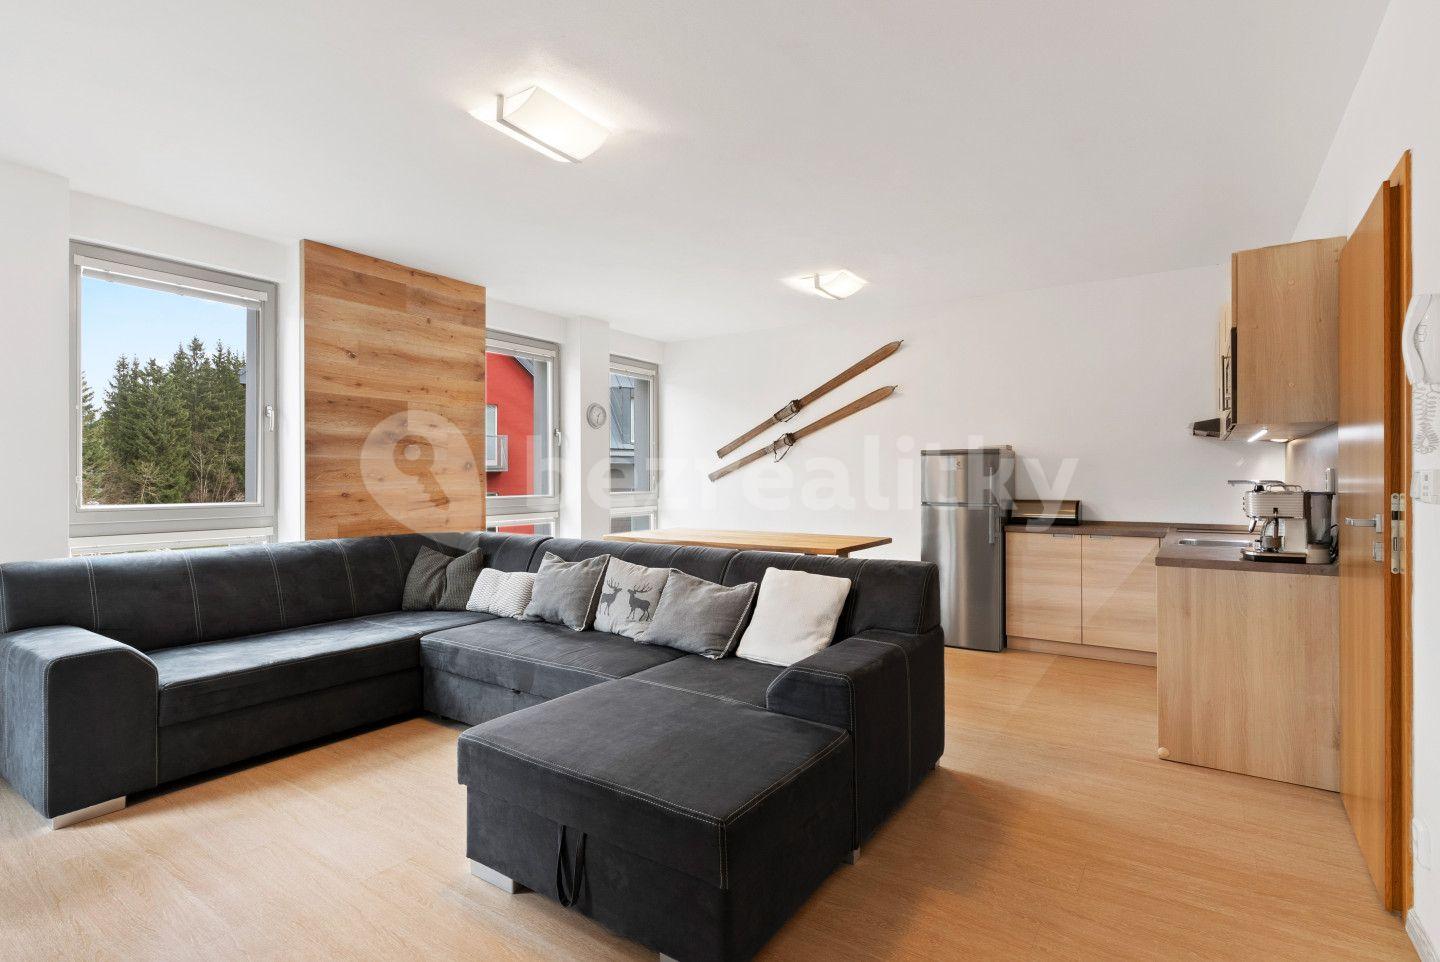 2 bedroom with open-plan kitchen flat for sale, 72 m², Harrachov, Liberecký Region